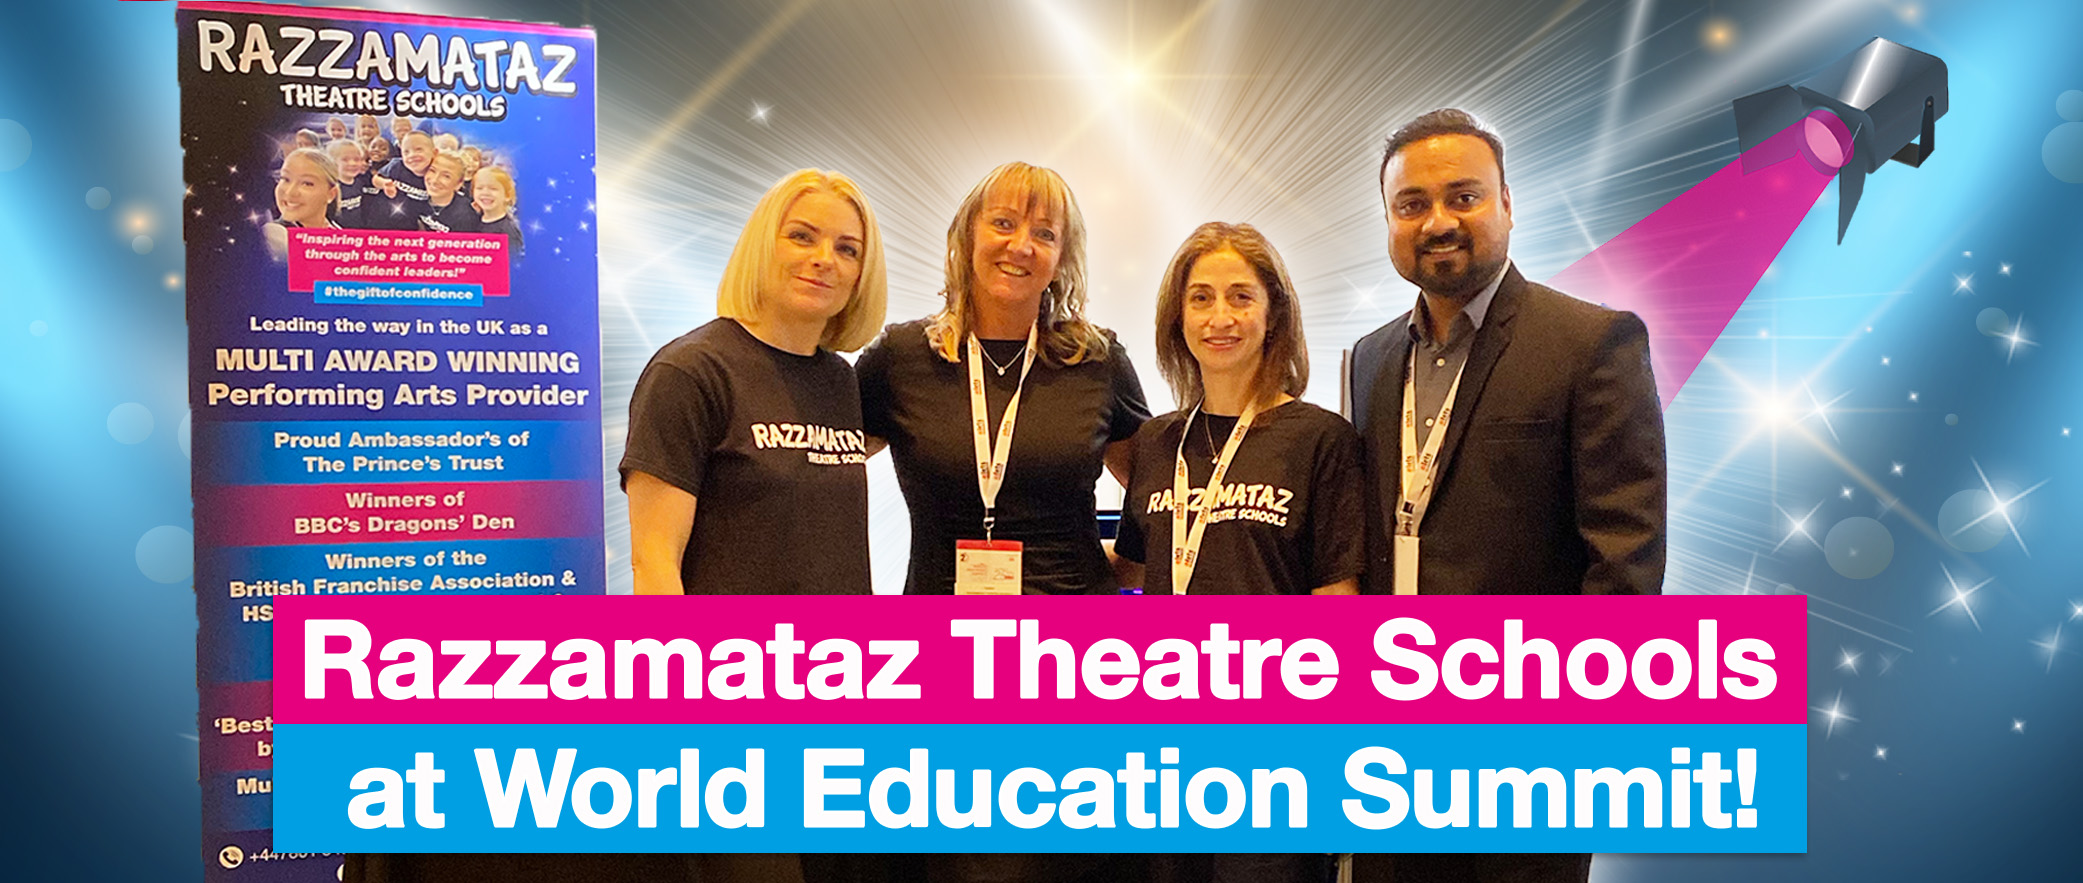 Razzamataz Theatre Schools at World Education Summit!